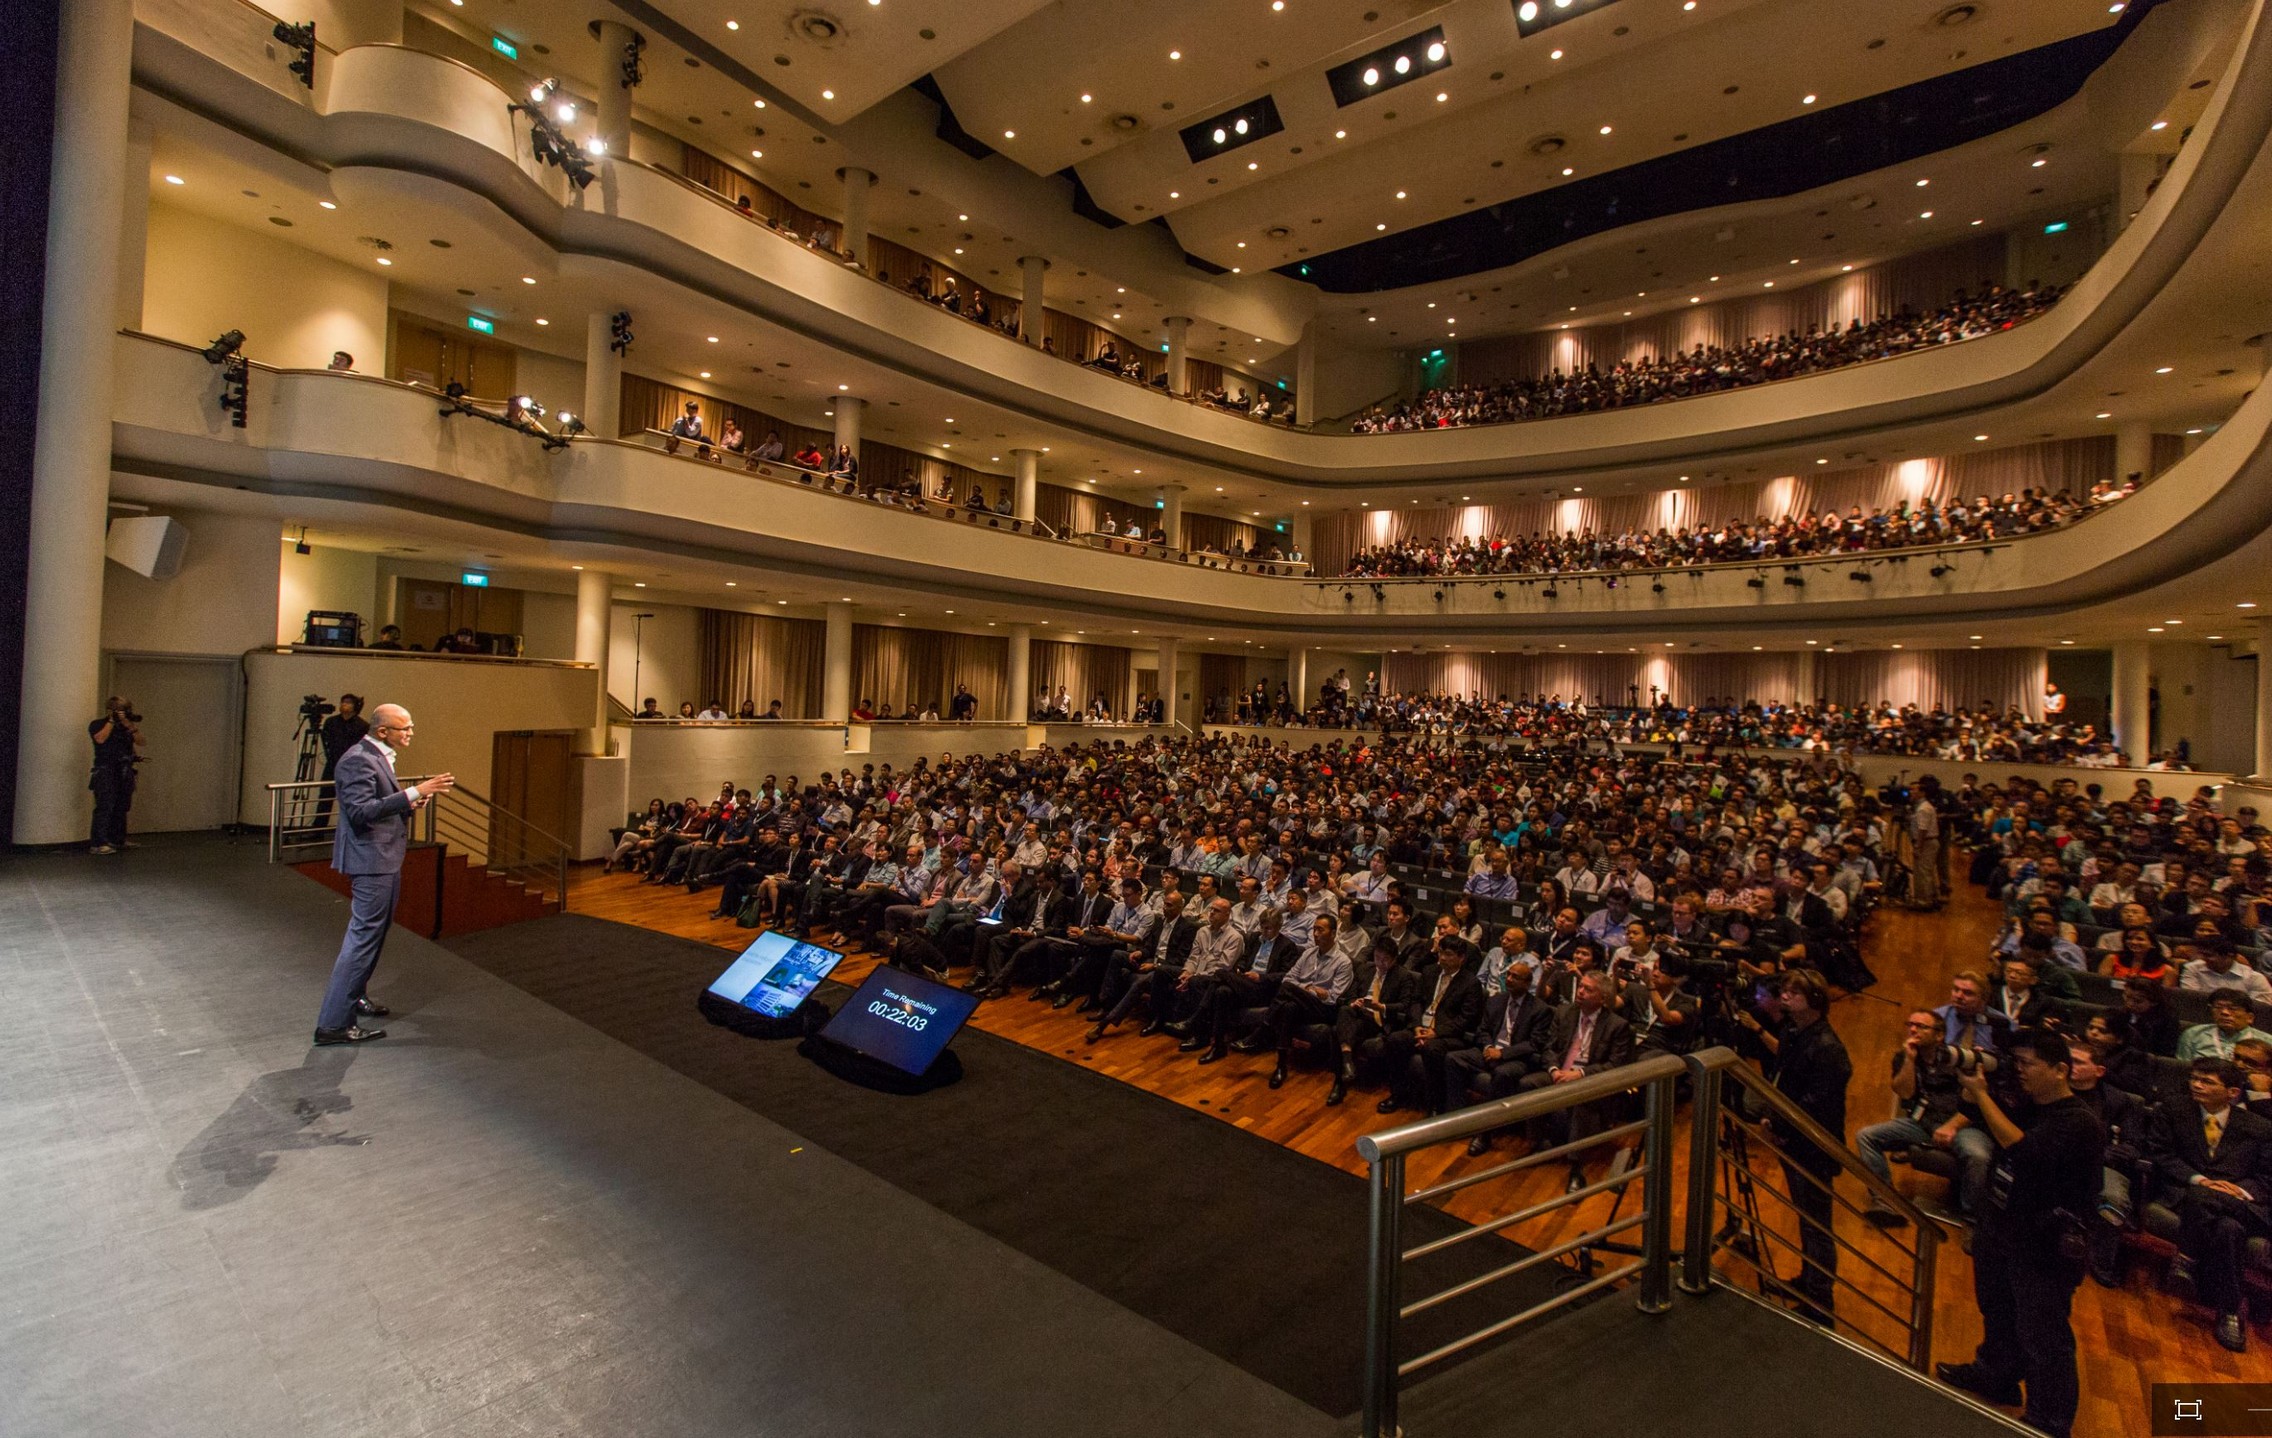 Microsoft CEO Satya Nadella delivering his keynote address at Microsoft Developer Day 2016 in Singapore.